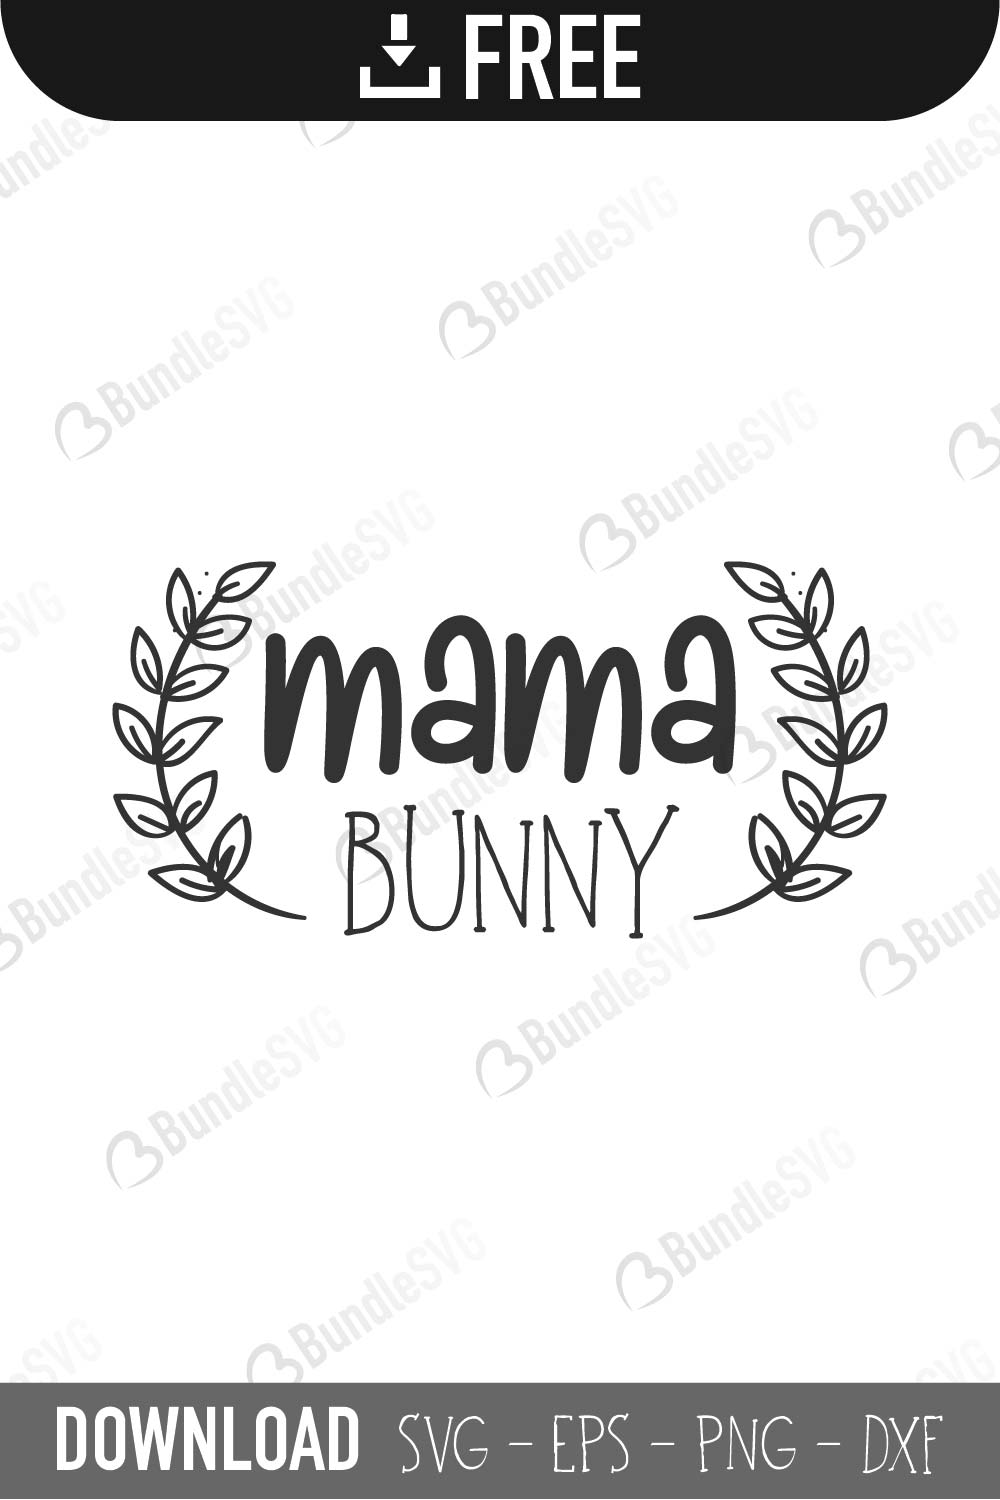 Download Mama Bunny SVG Cut Files Free Download | BundleSVG.com